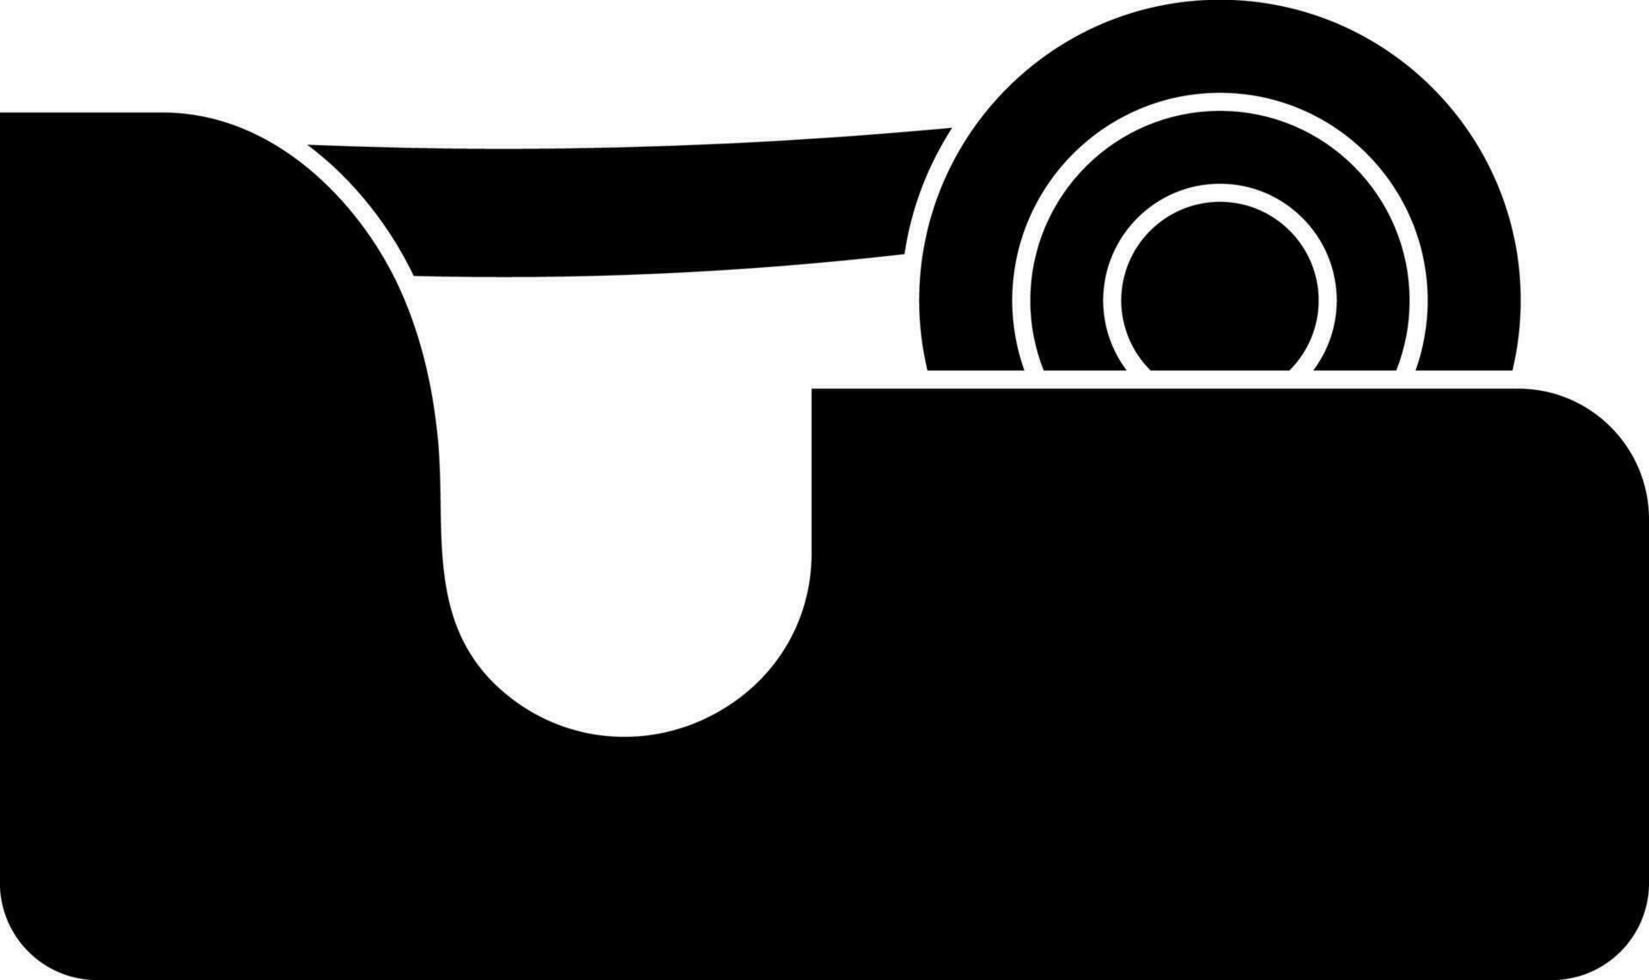 Glyph tape dispenser icon in Black and White color. vector